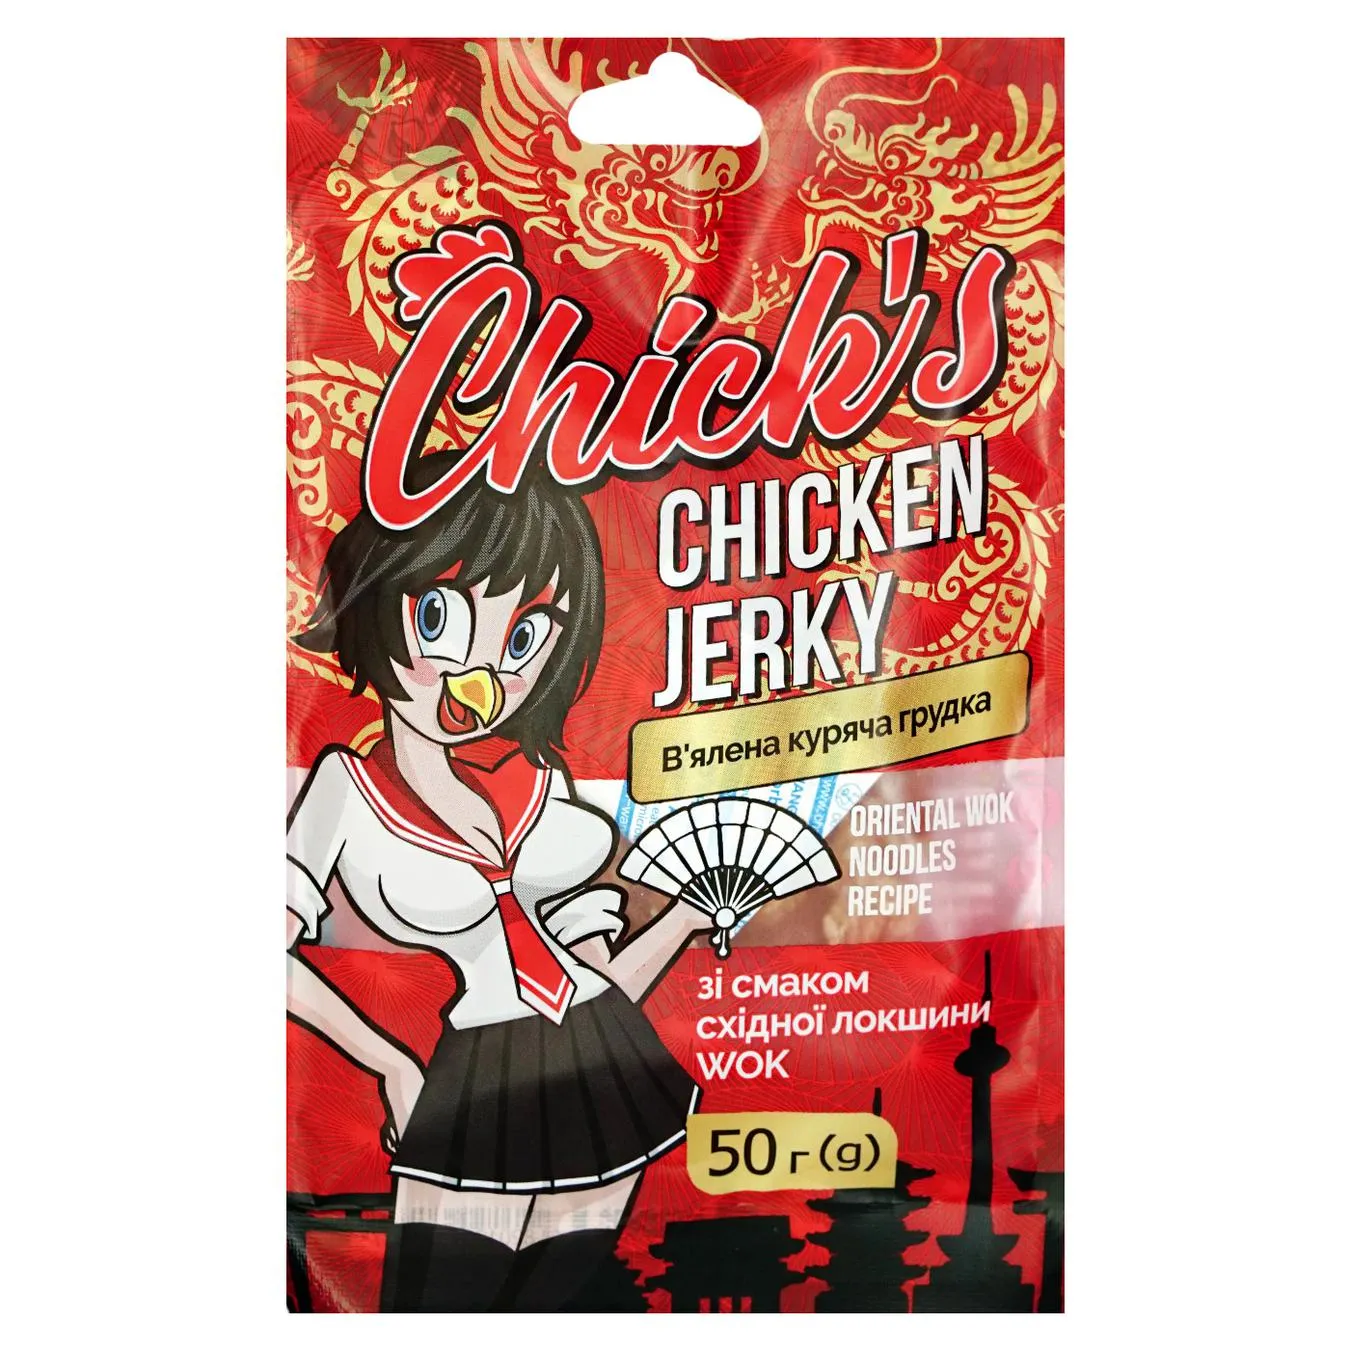 Chick's jerky chicken taste of oriental noodles 50g